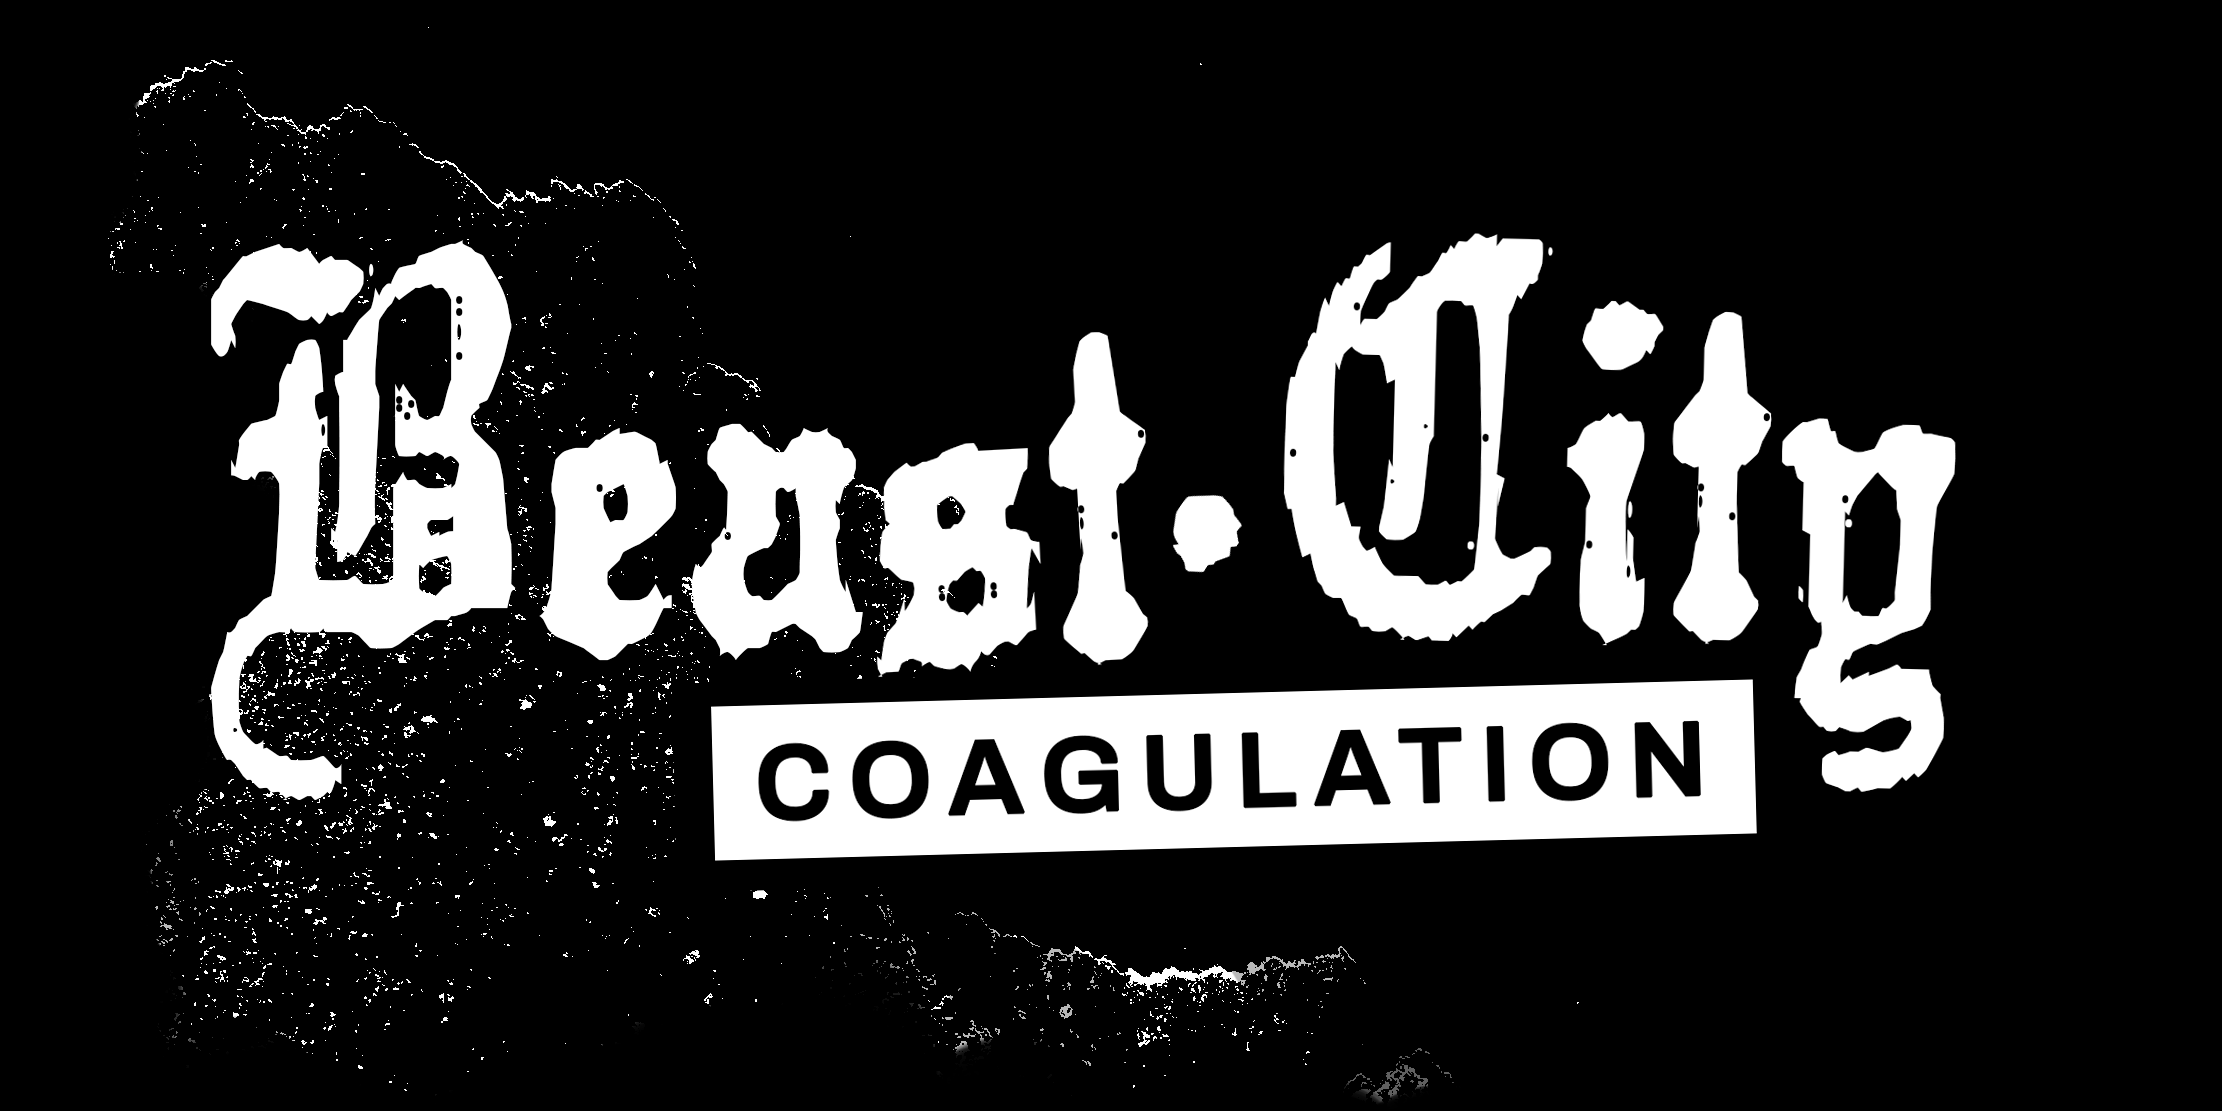 BEAST CITY: COAGULATION